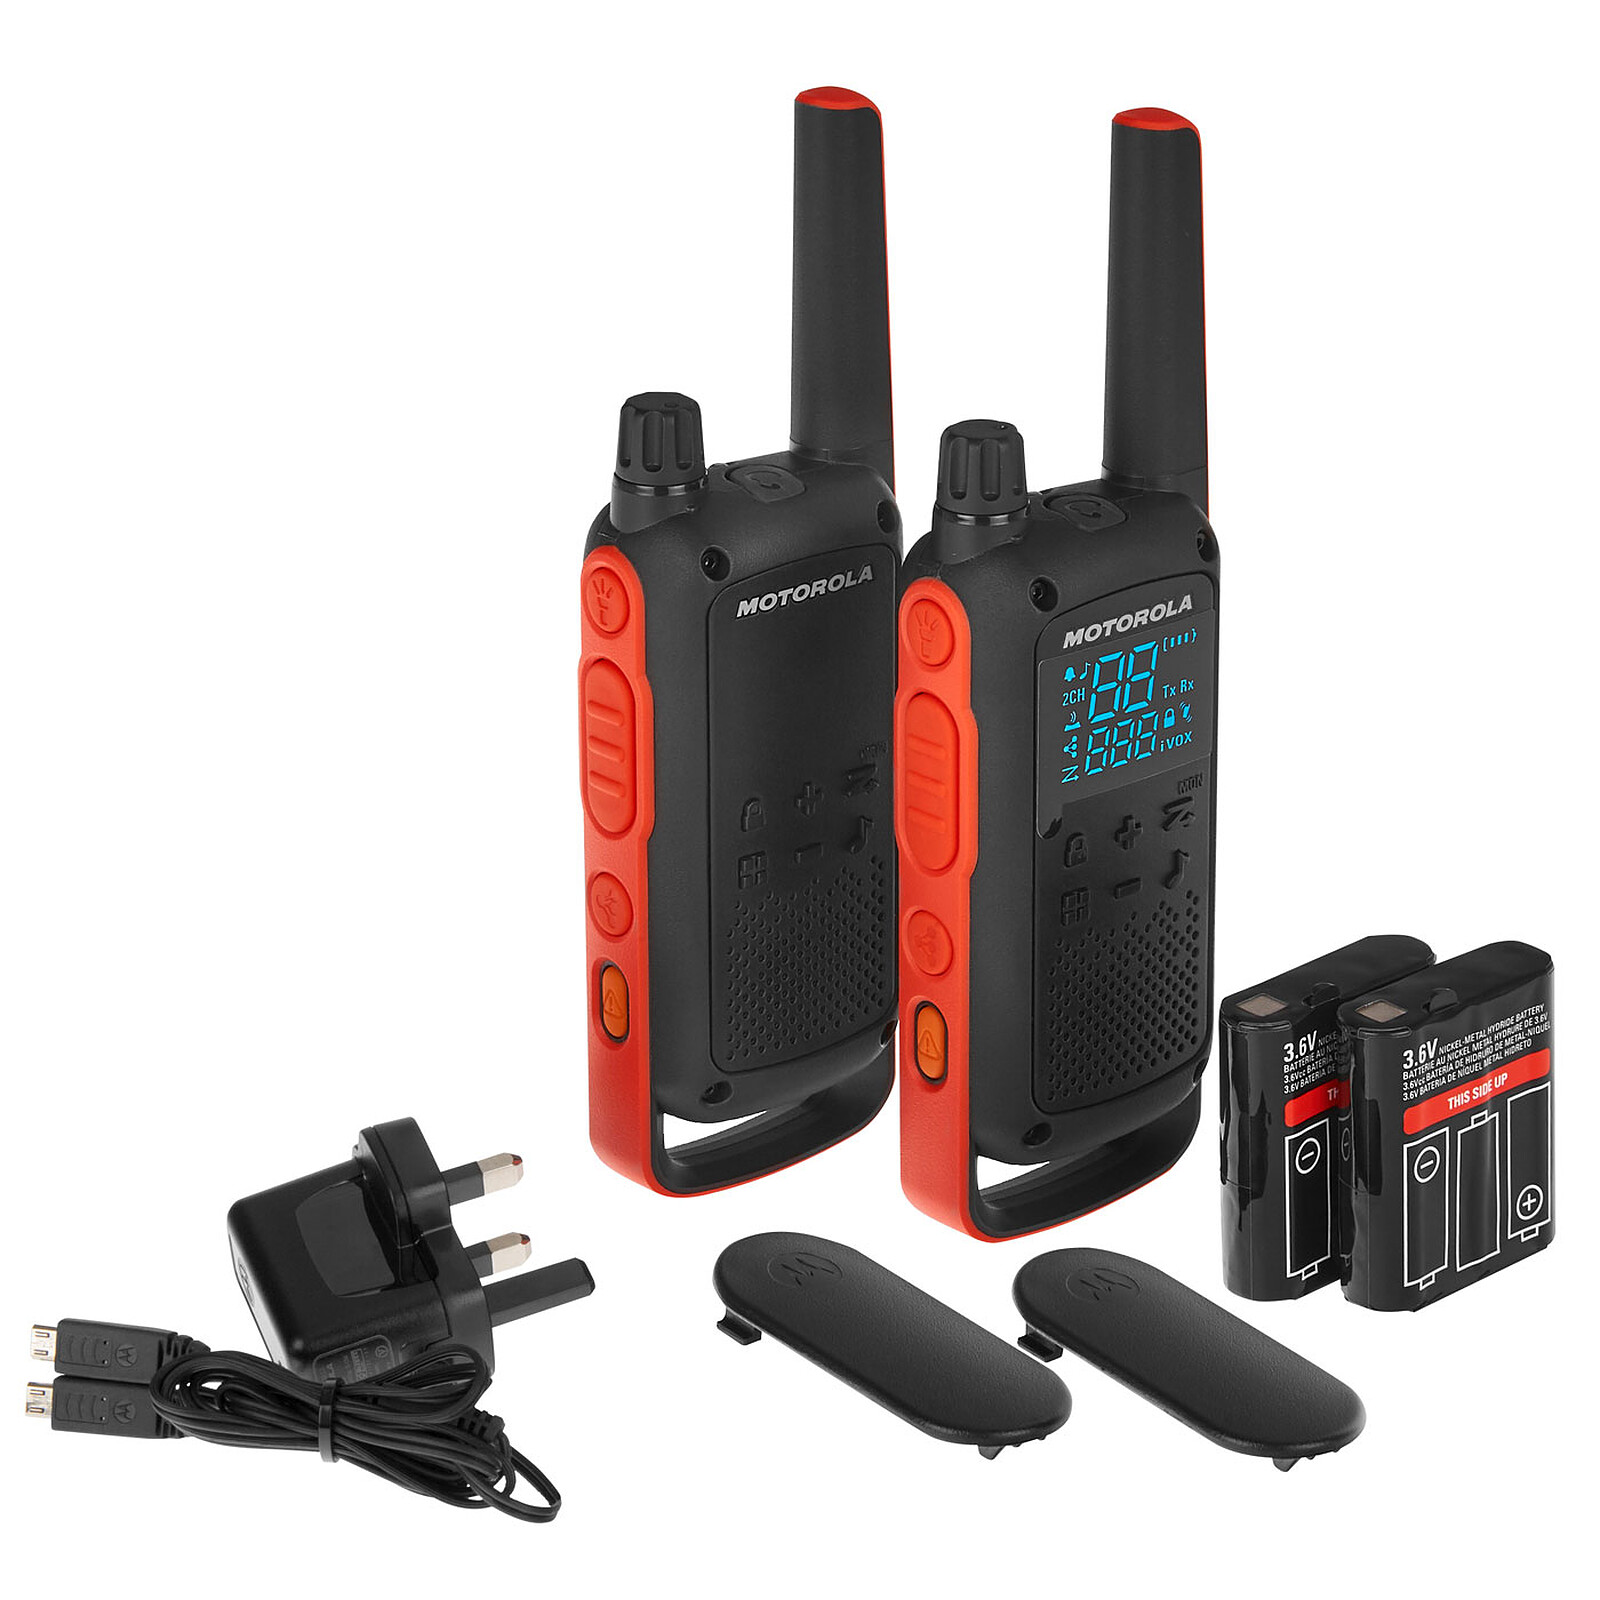 Midland G9 Pro Valibox - Talkie walkie - Garantie 3 ans LDLC